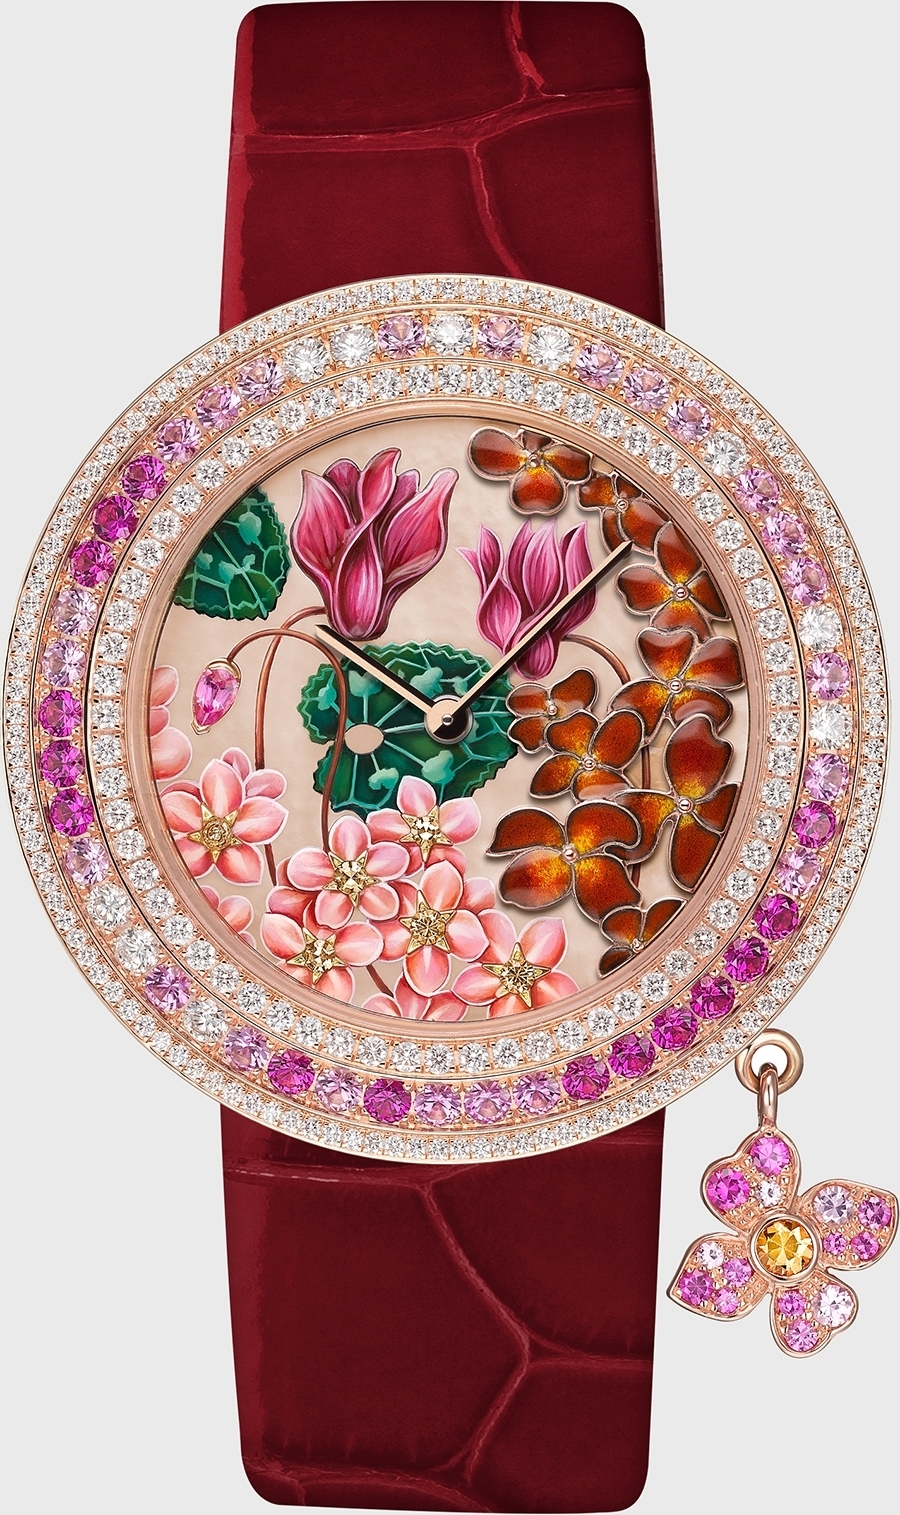 imagen 2 de Estallido floral en los relojes de Van Cleef & Arpels.